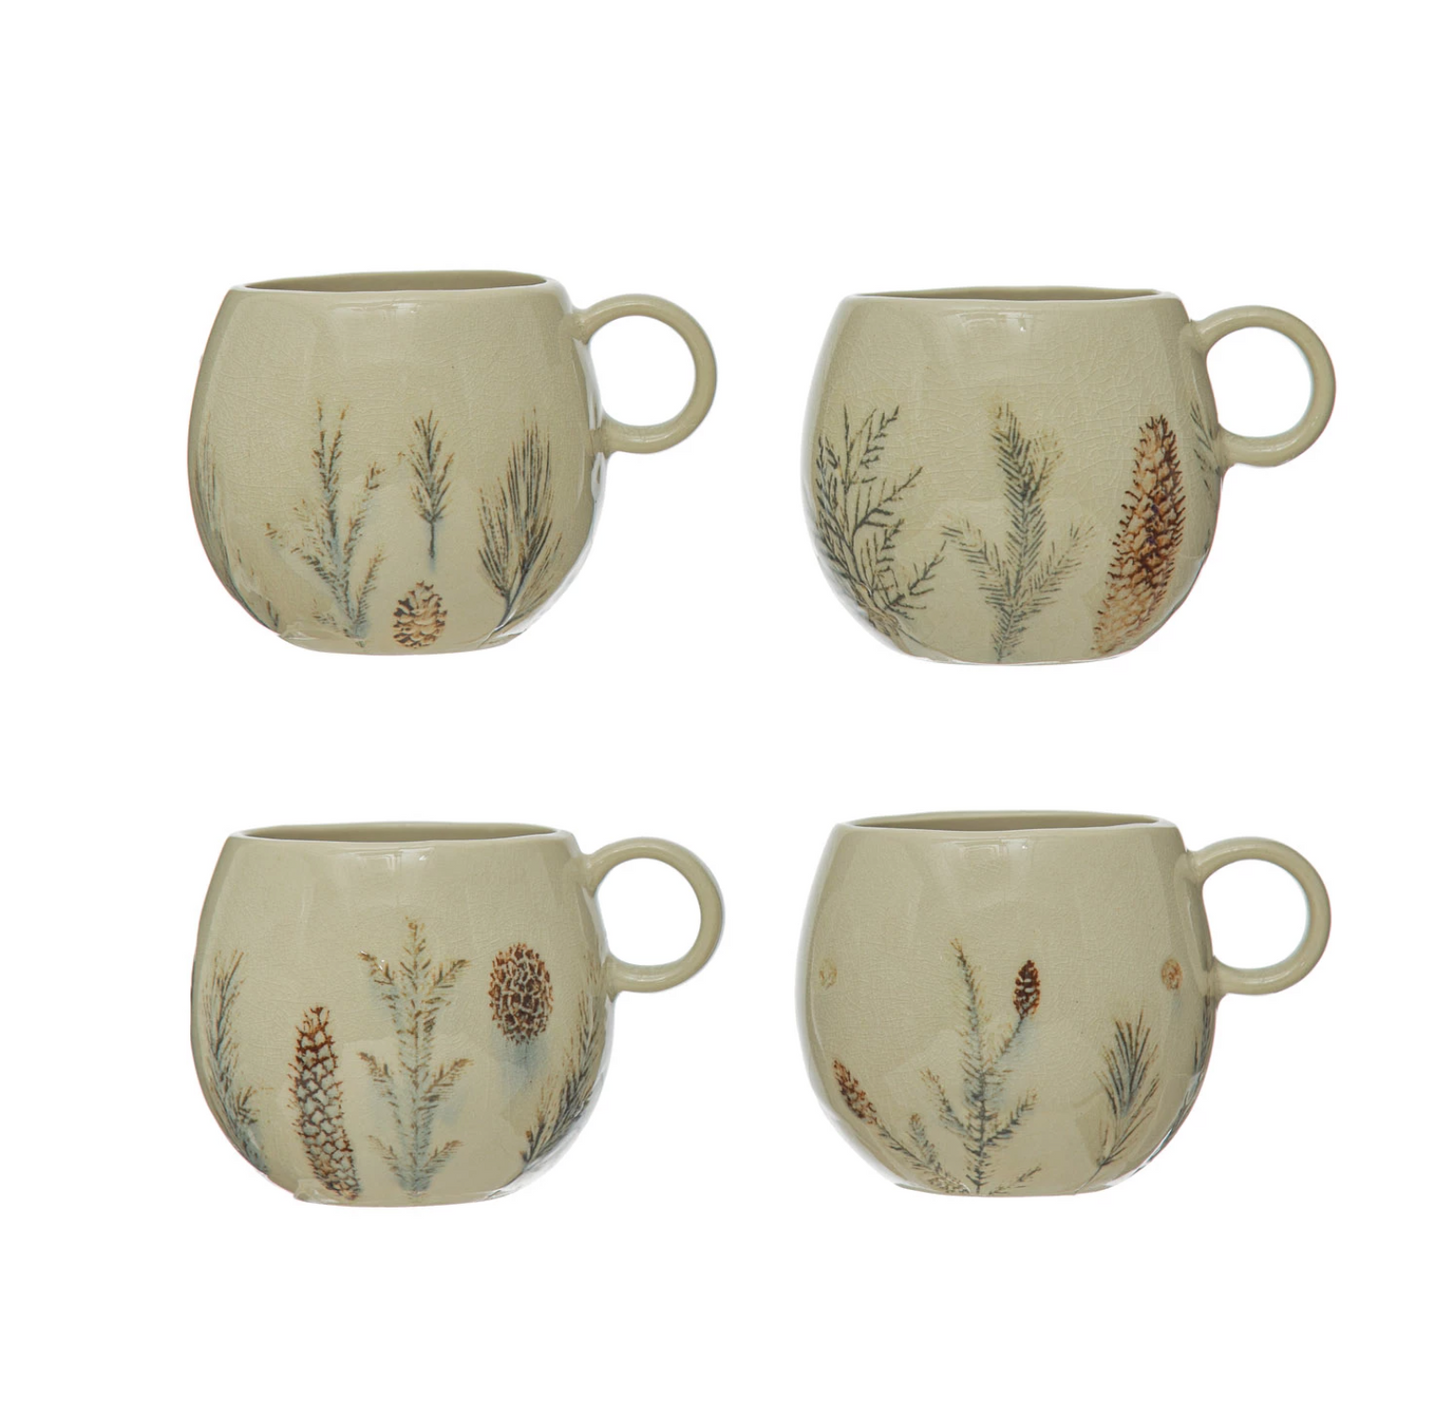 Evergreen Stoneware Mug and Saucer Set